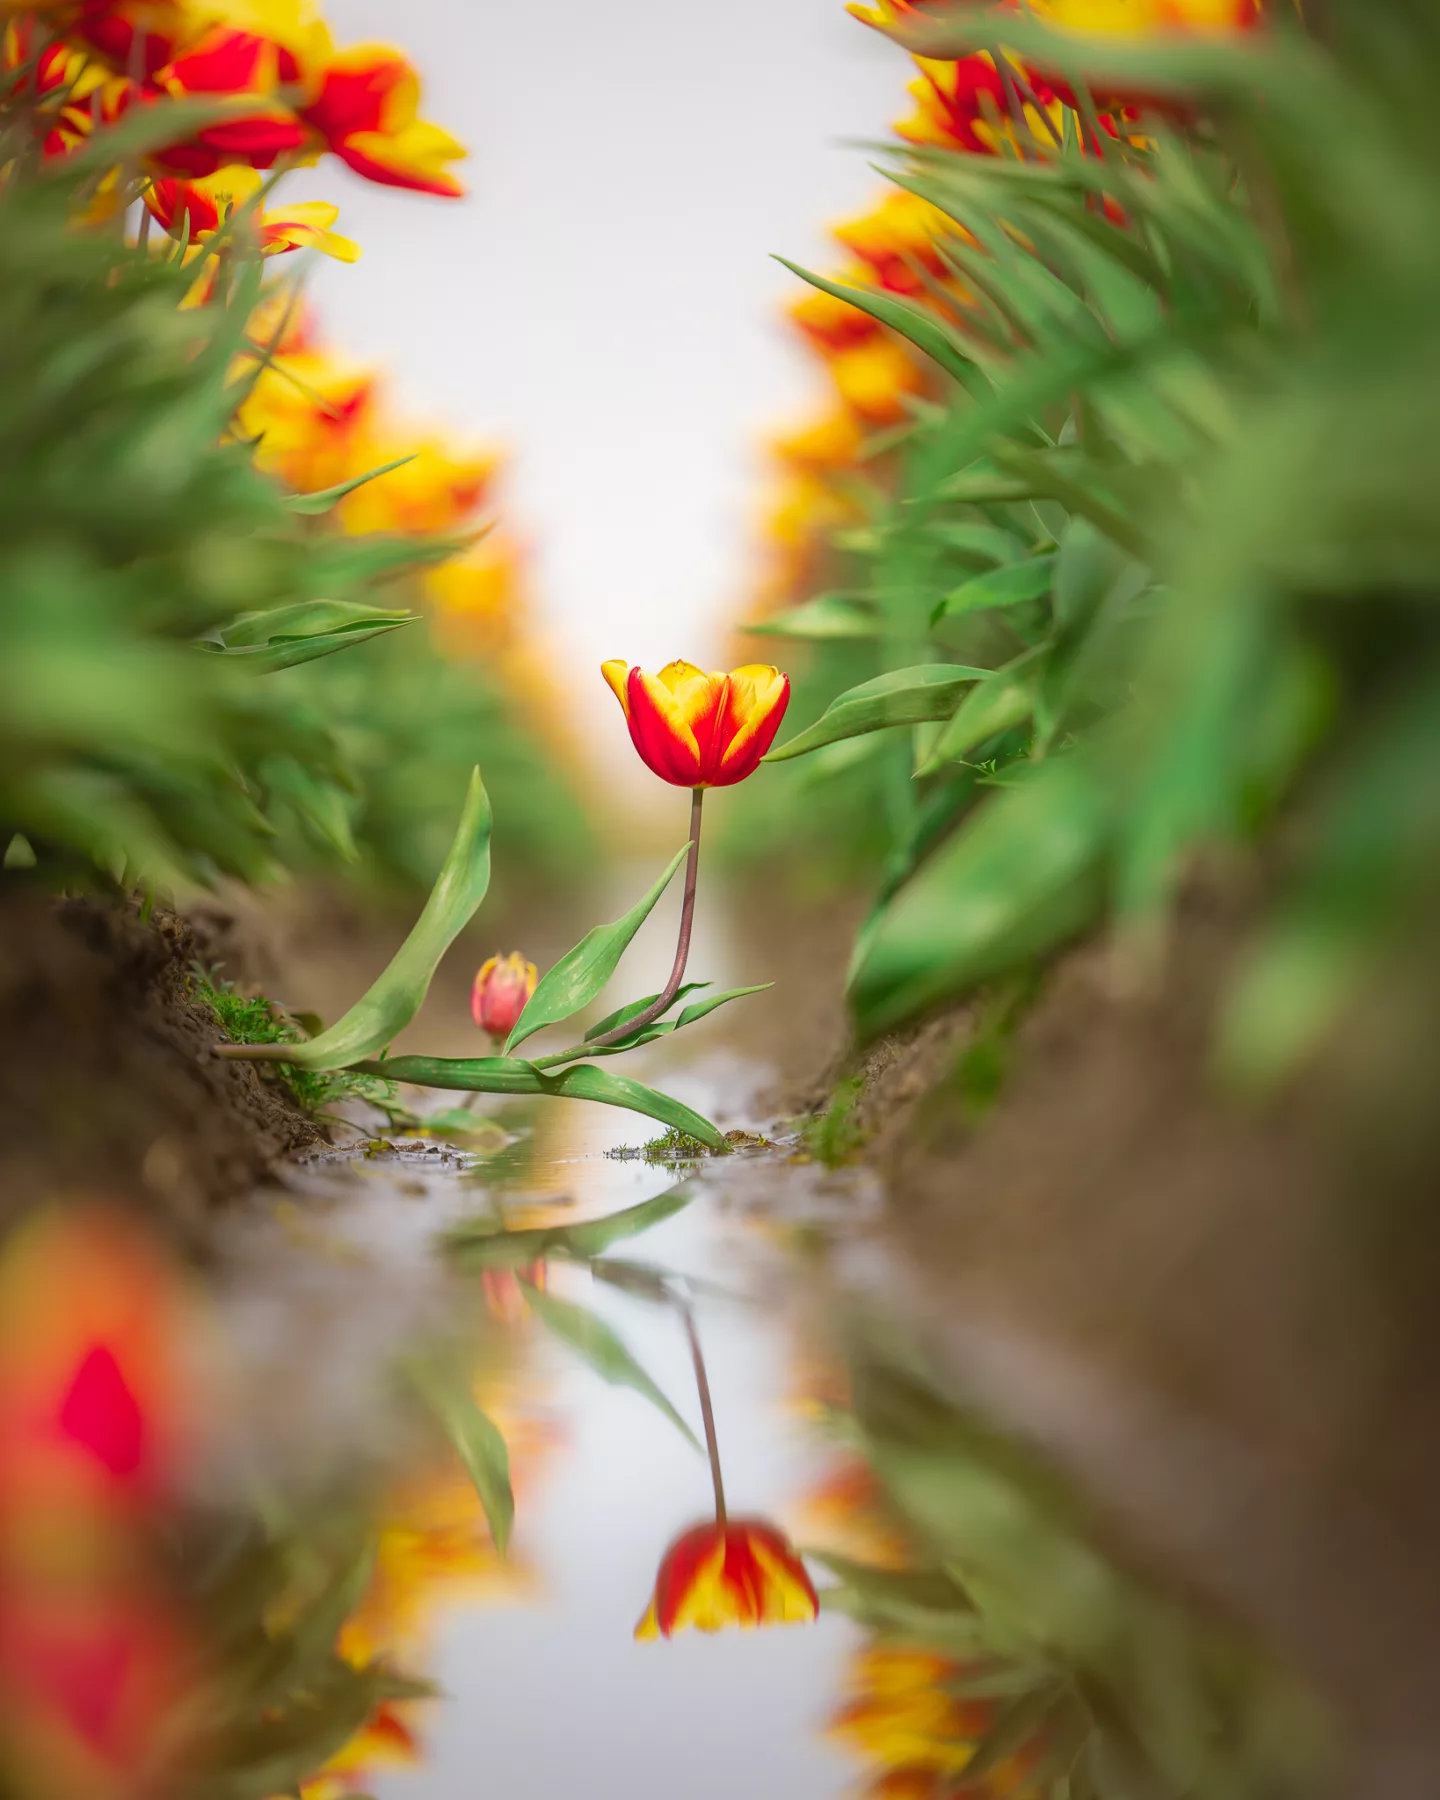 De tulpen reflectie